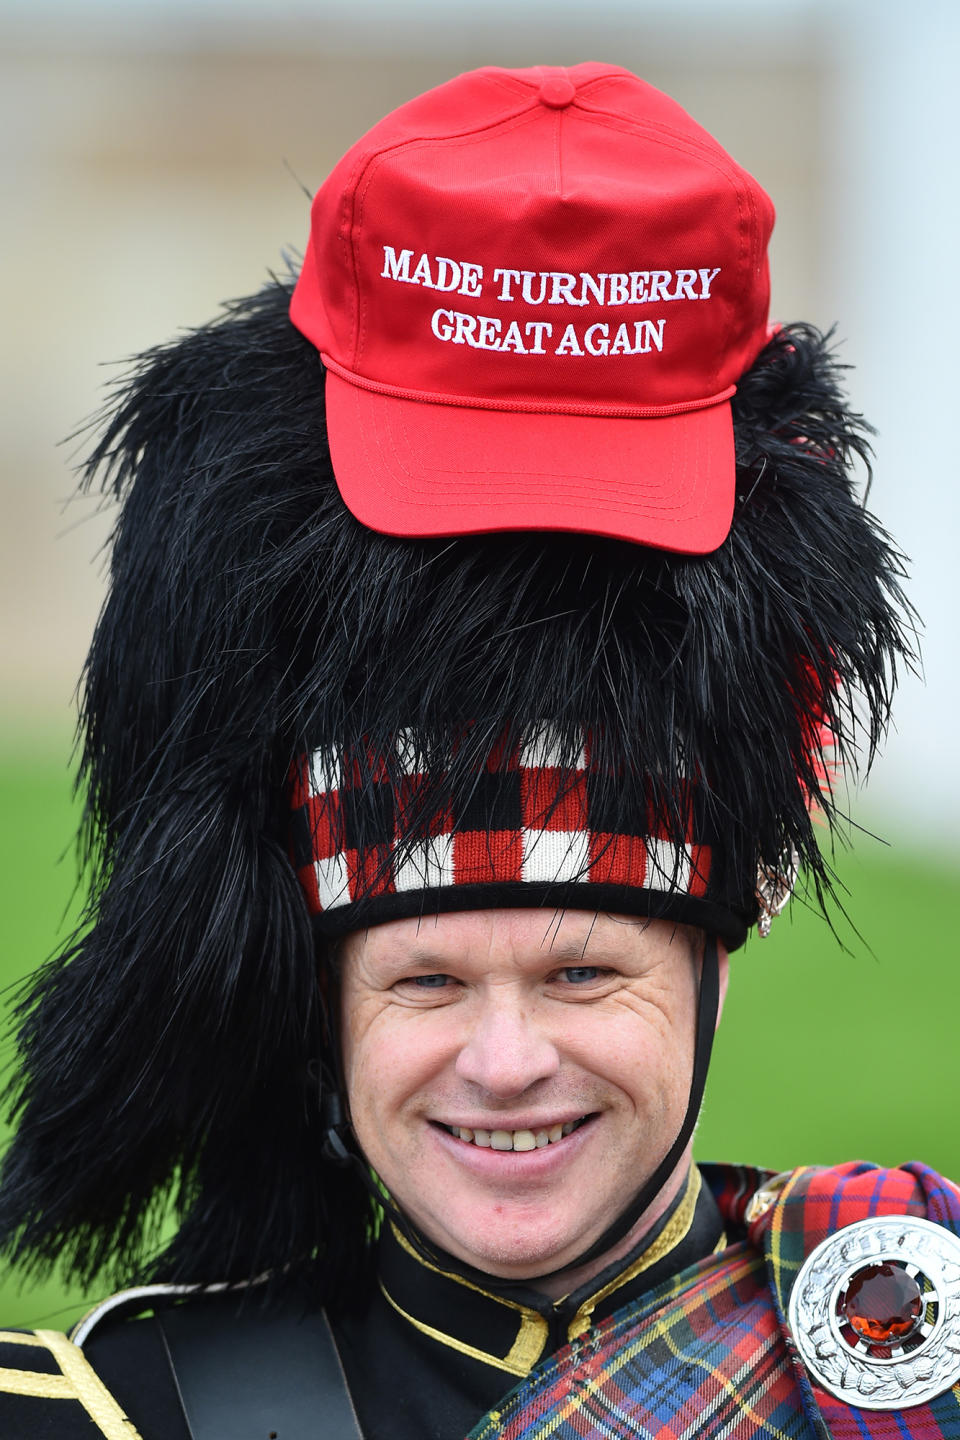 Trump visits Scotland to reopen golf resort